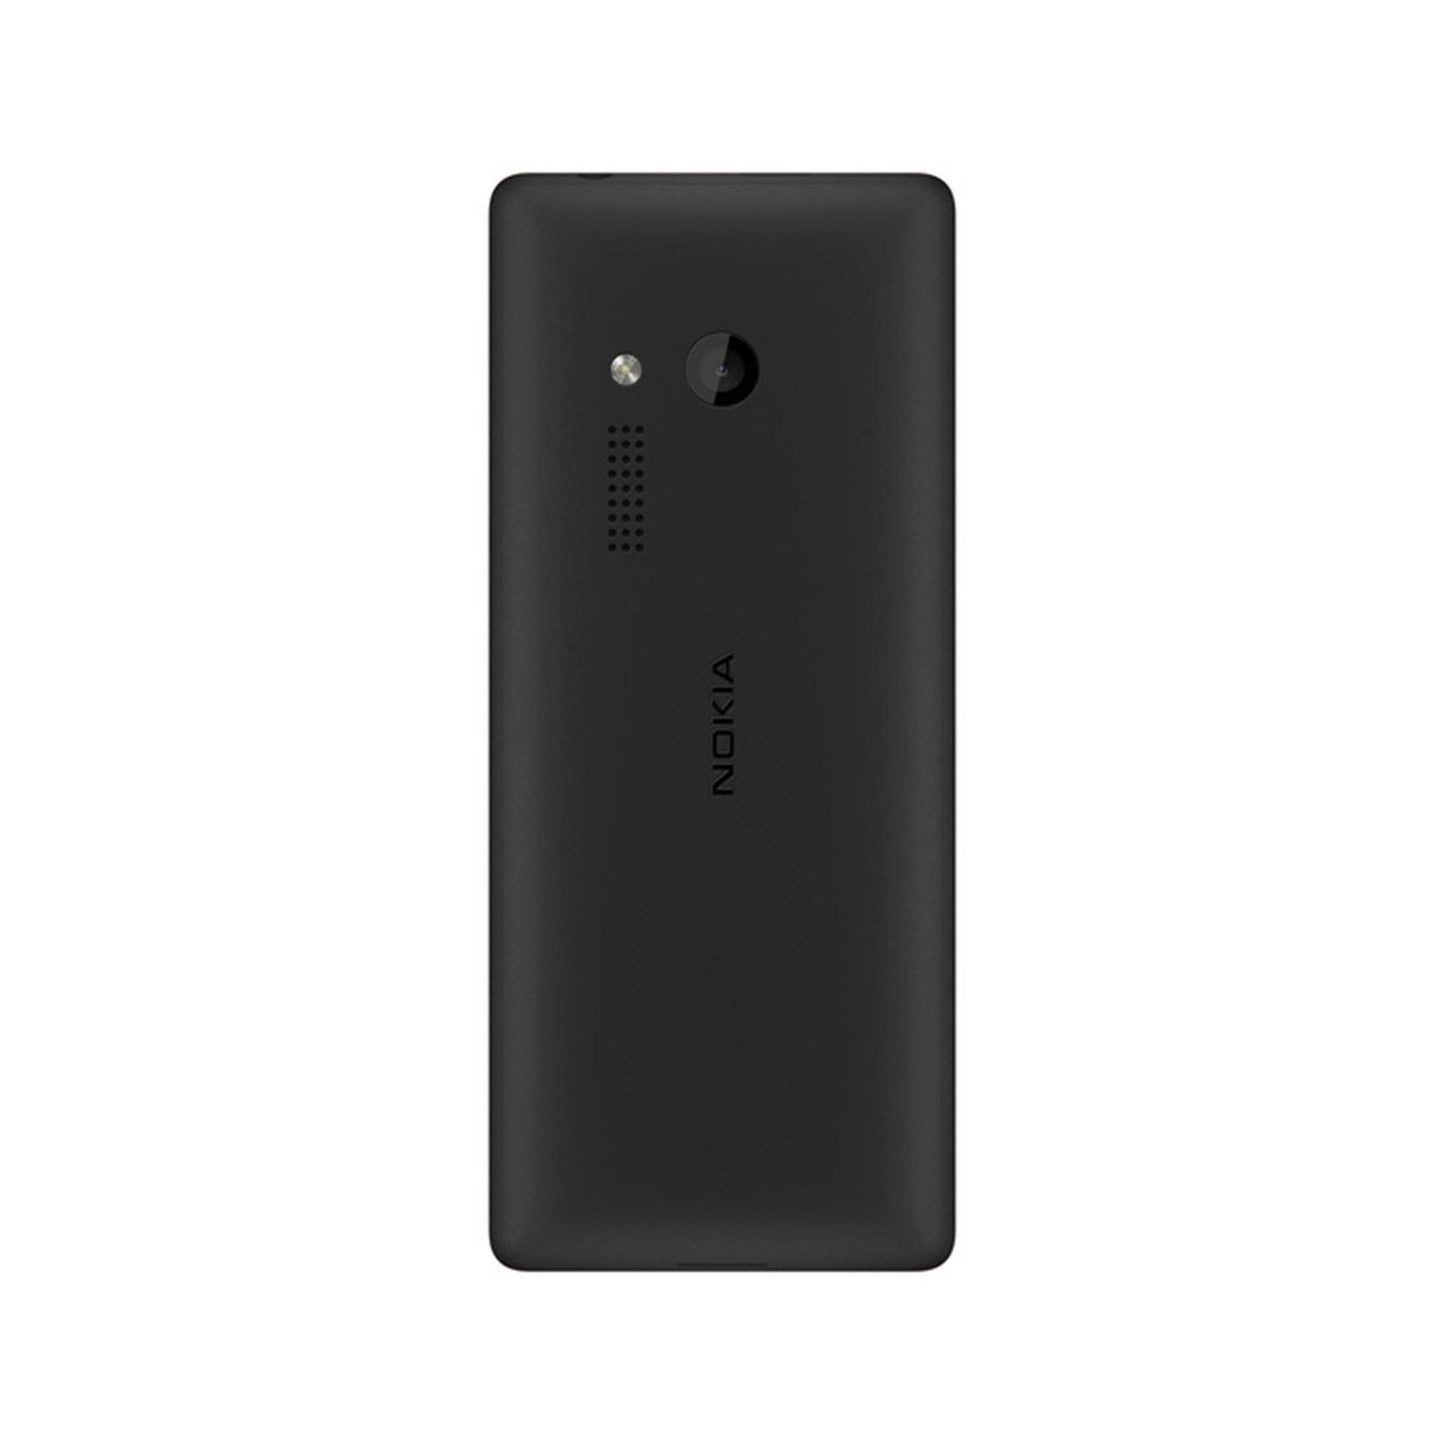 Nokia 150 - New fonezworldarklow